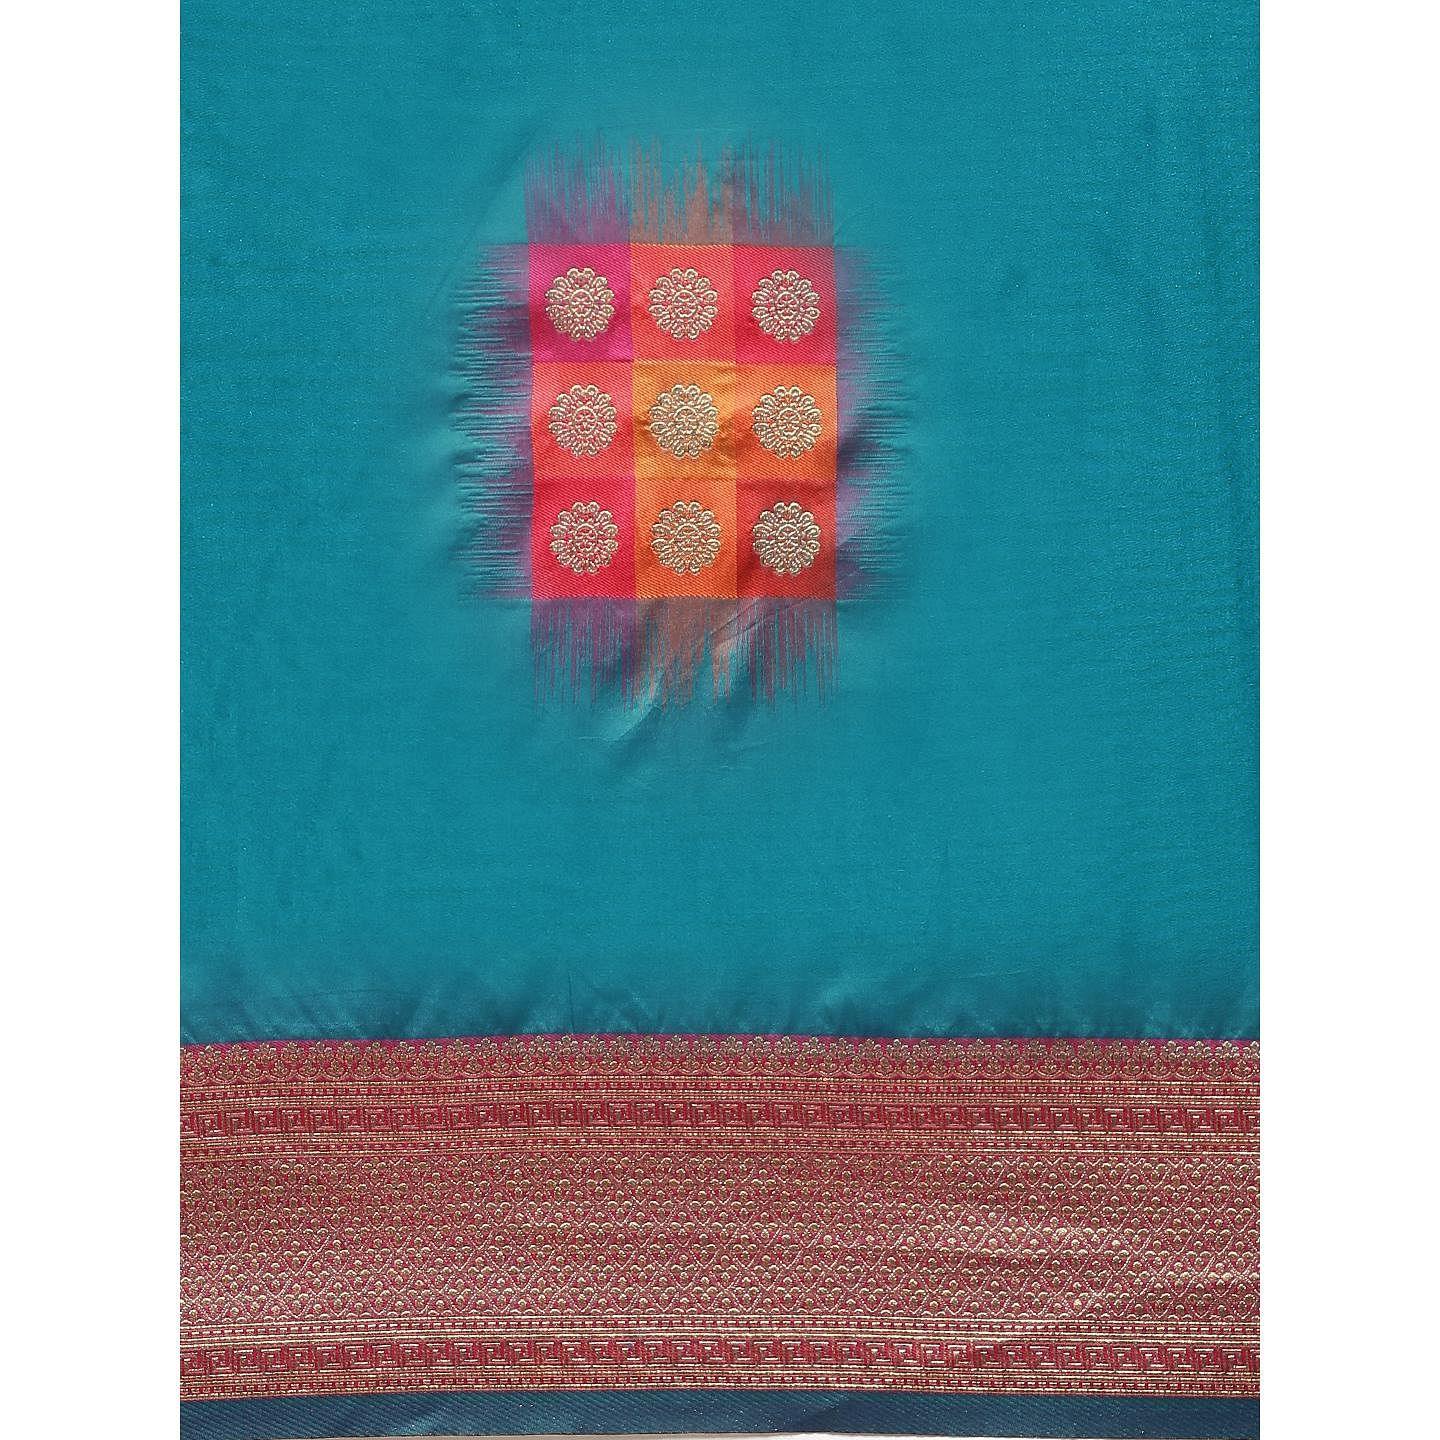 Turquoise Festive Wear Woven Kanjivaram Silk Saree - Peachmode